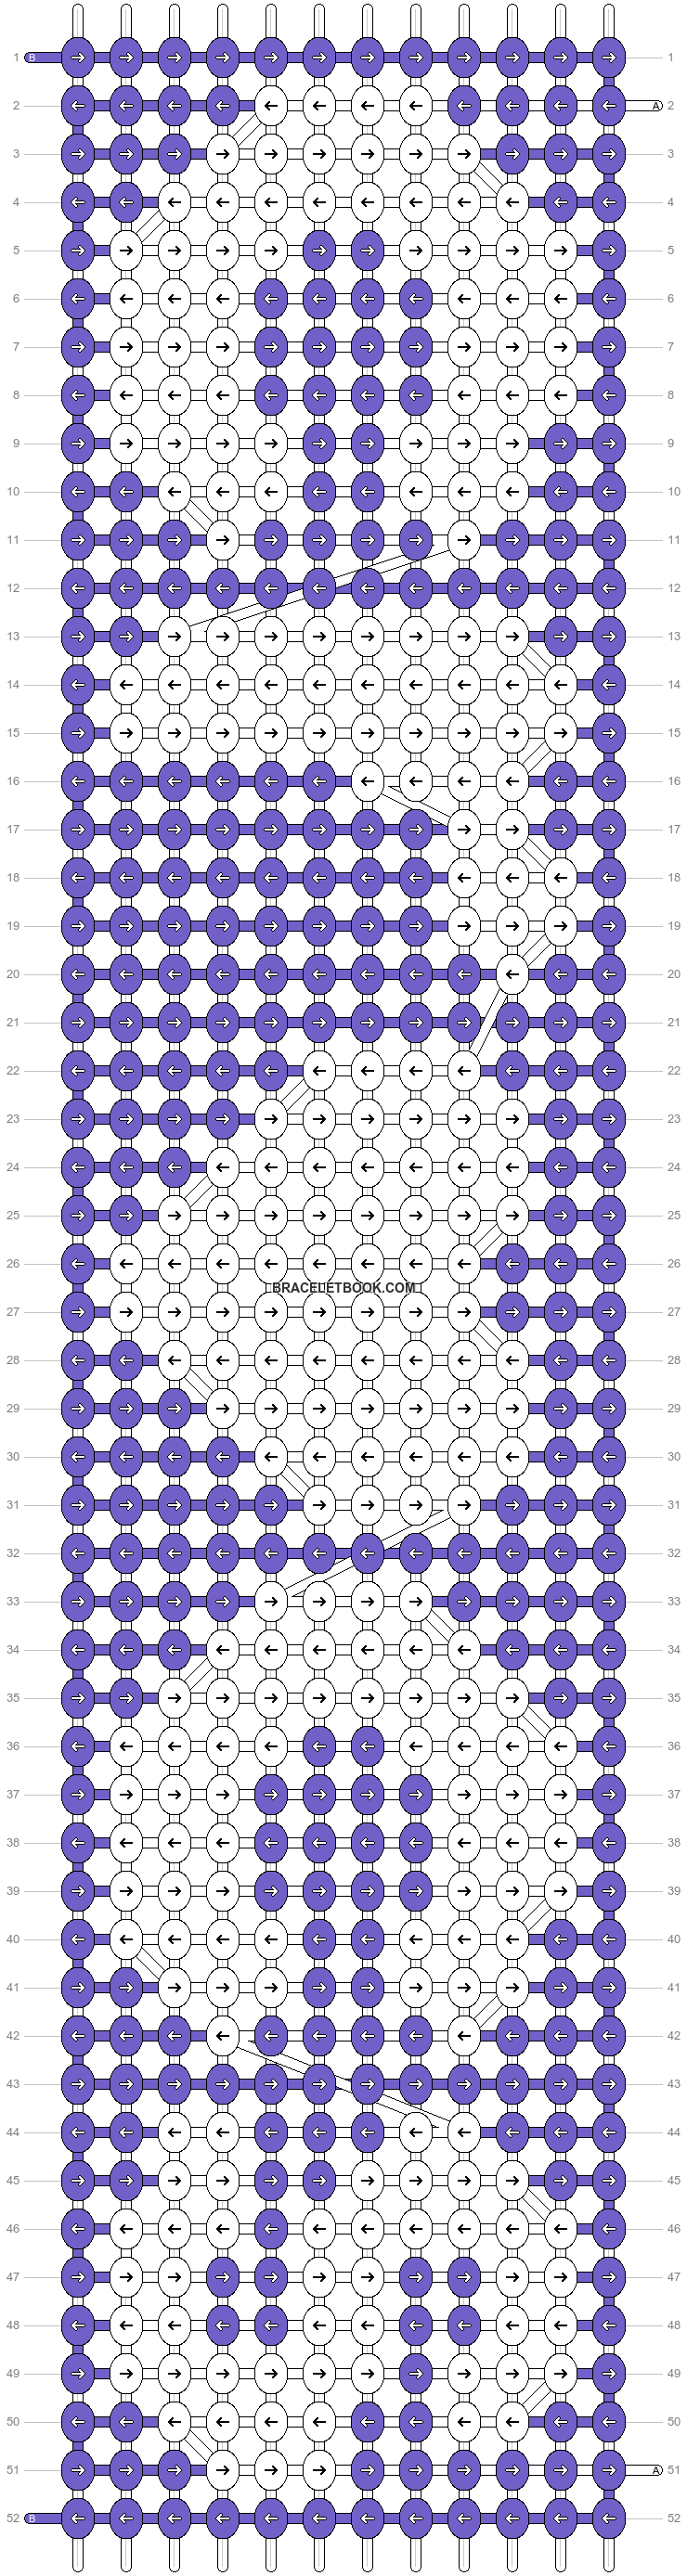 Alpha pattern #64183 variation #140077 pattern